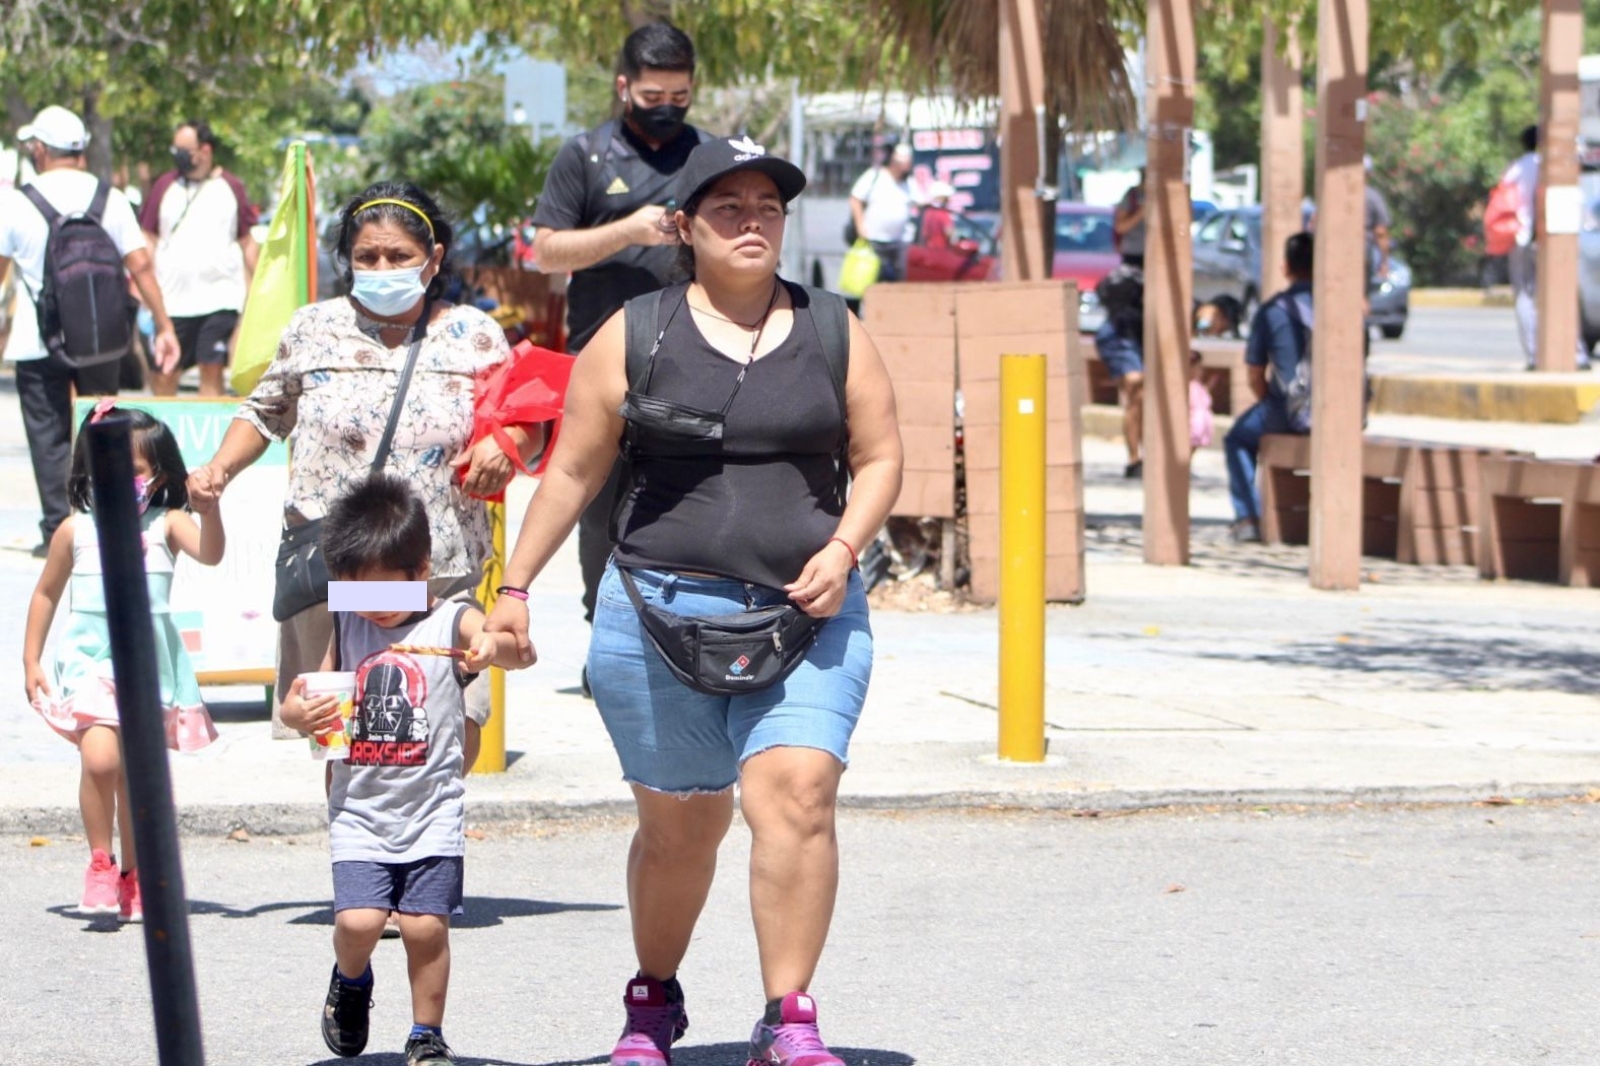 Golpe de calor mata a niño de 3 años en Playa del Carmen